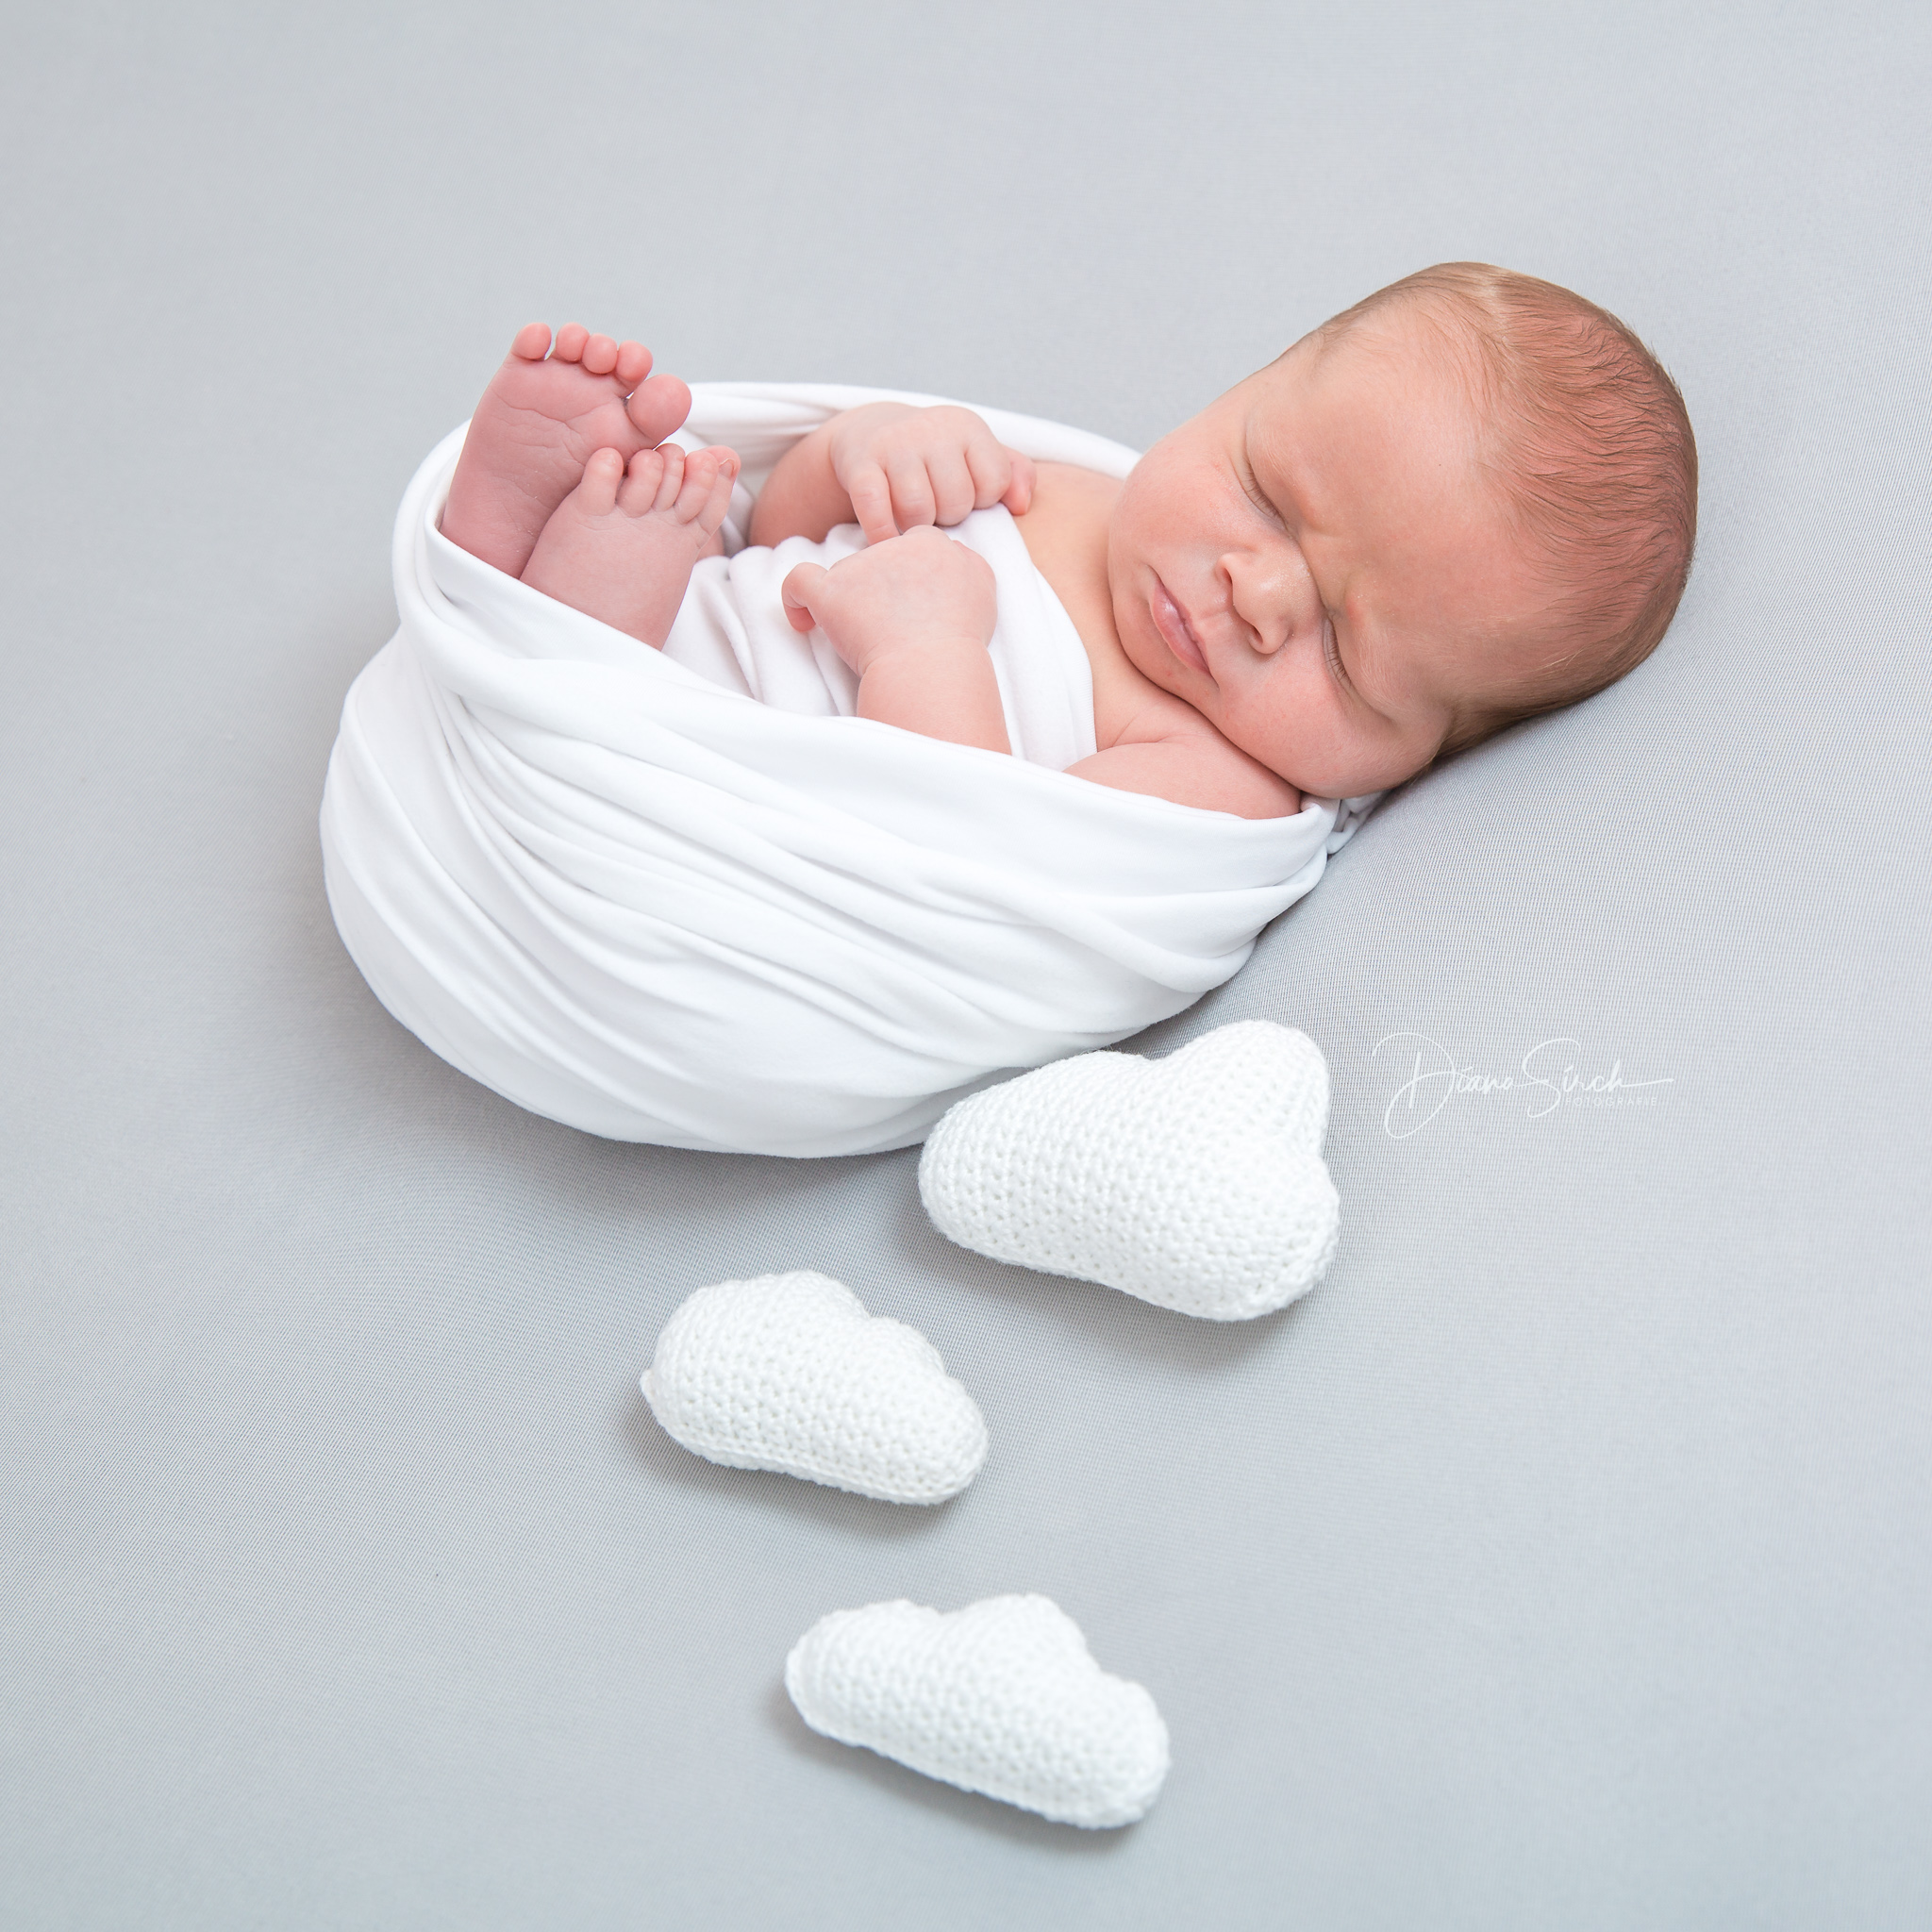 Neugeborenenfoto, Newbornfoto